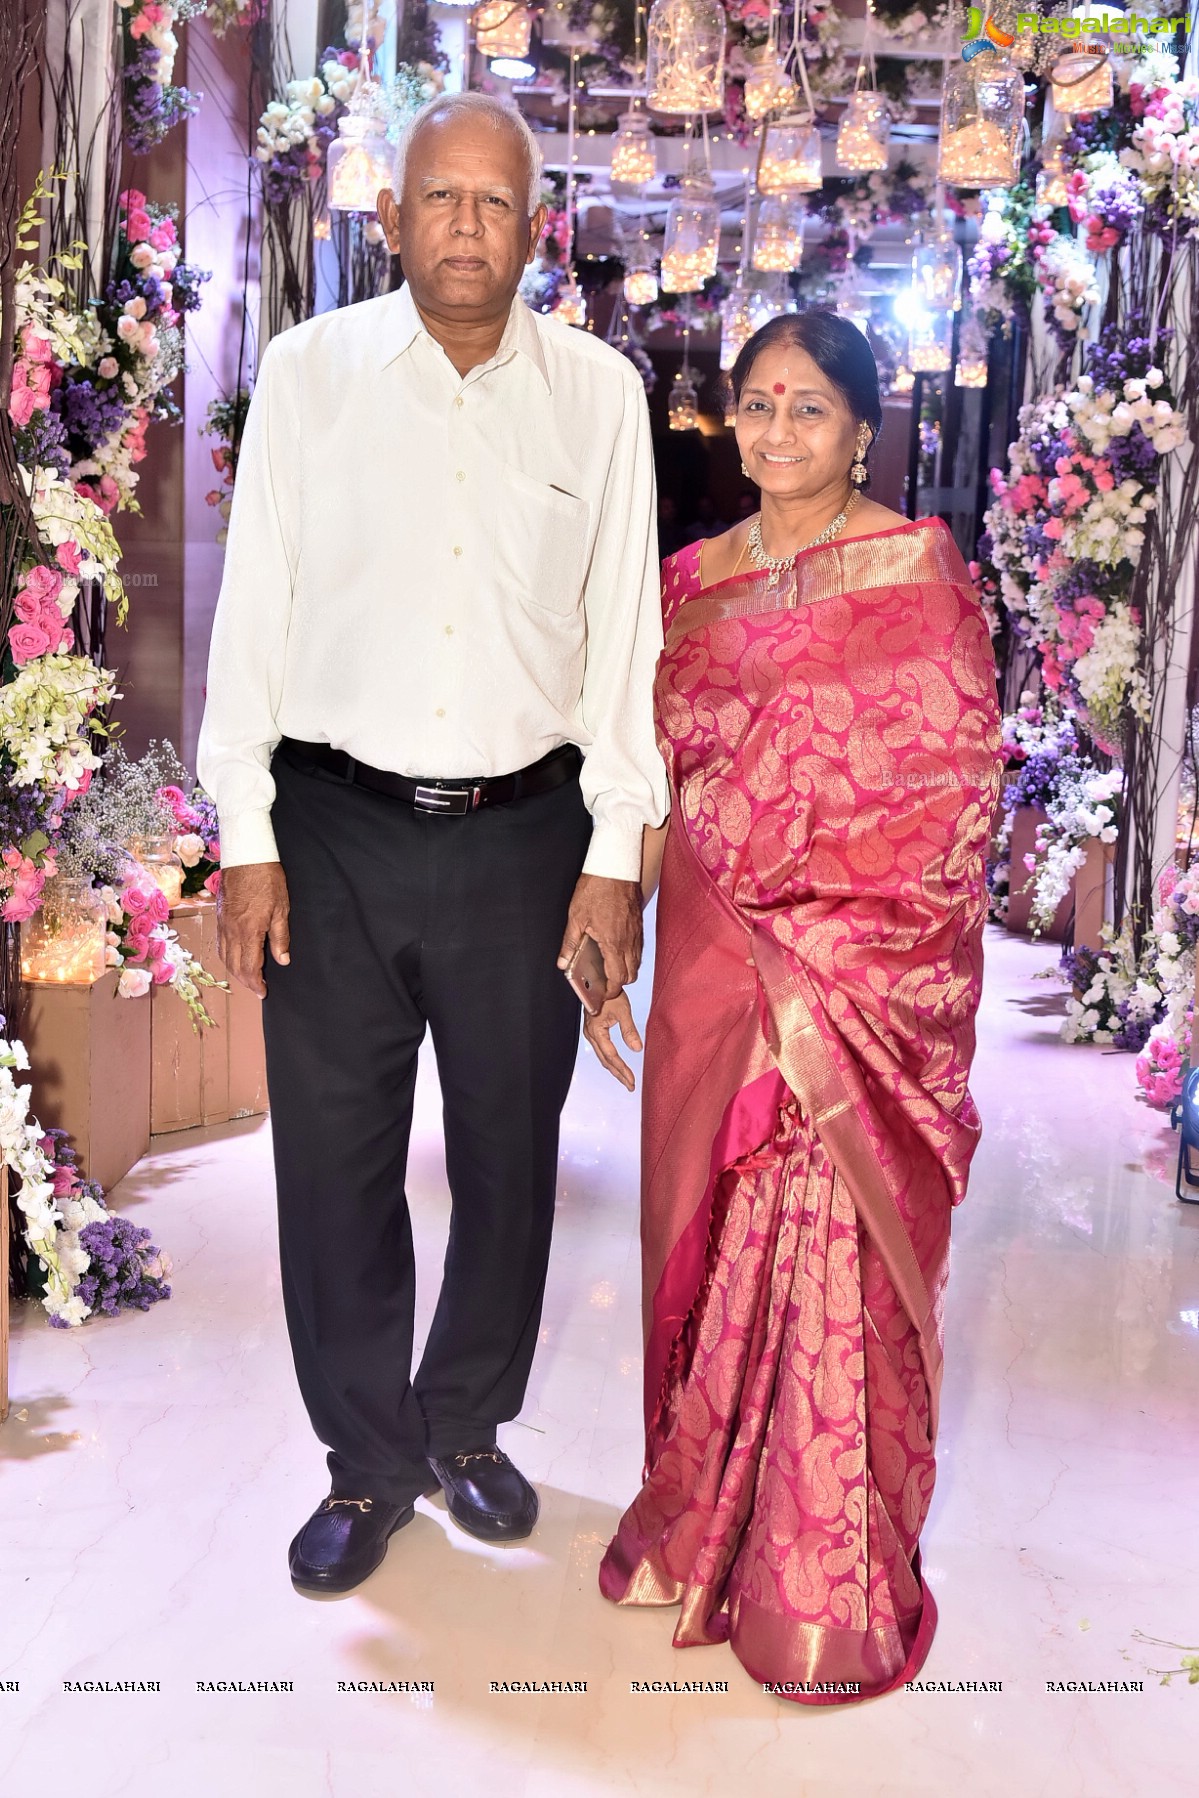 Grand Engagement Ceremony of Karthik with Depthi Sai at Trident, Hyderabad